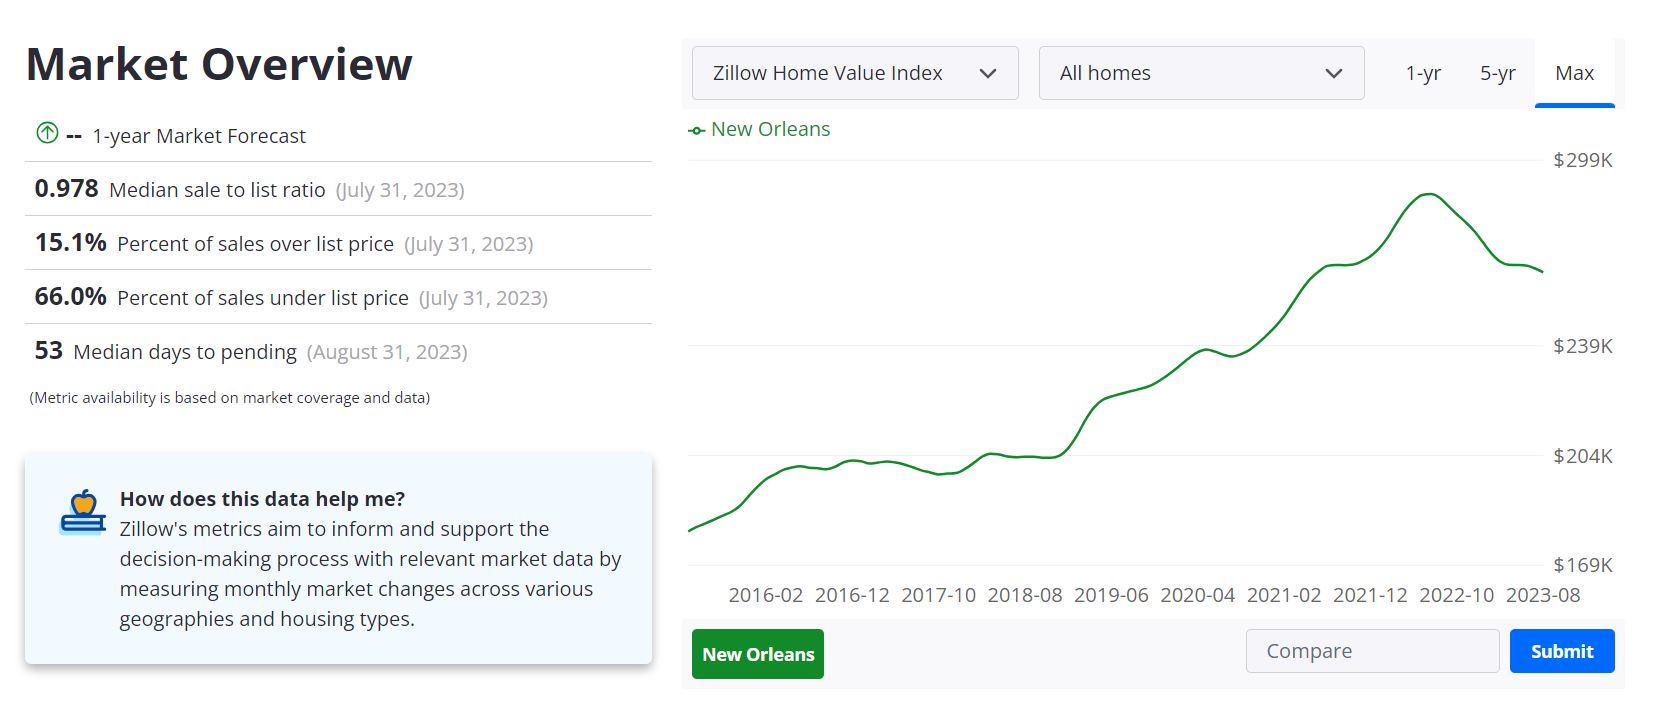 New Orleans Housing Market Forecast 2023-2024